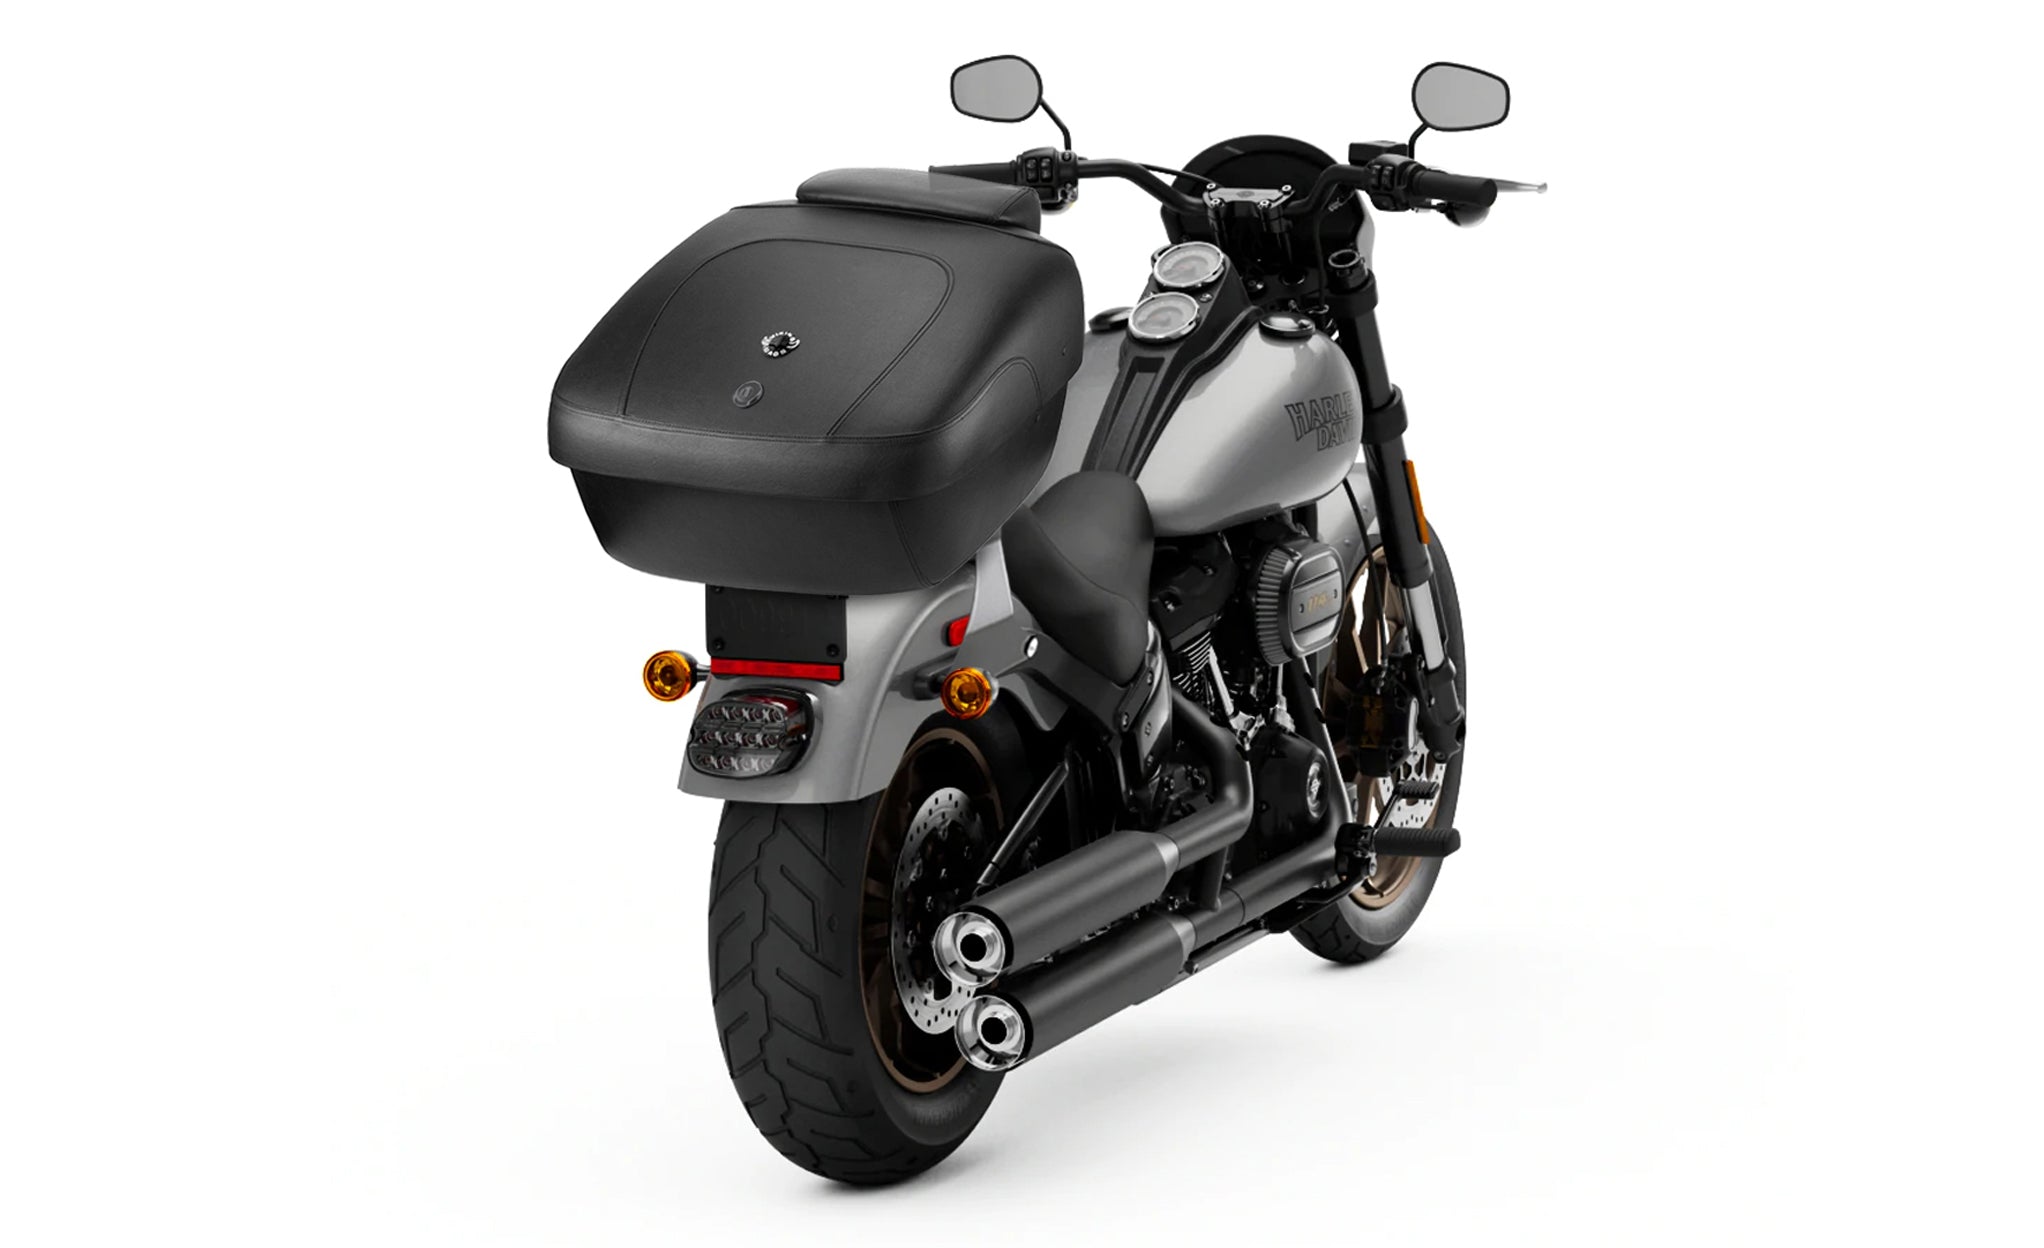 Viking Premium Extra Large Suzuki Leather Wrapped Hard Motorcycle Trunk Bag on Bike View @expand